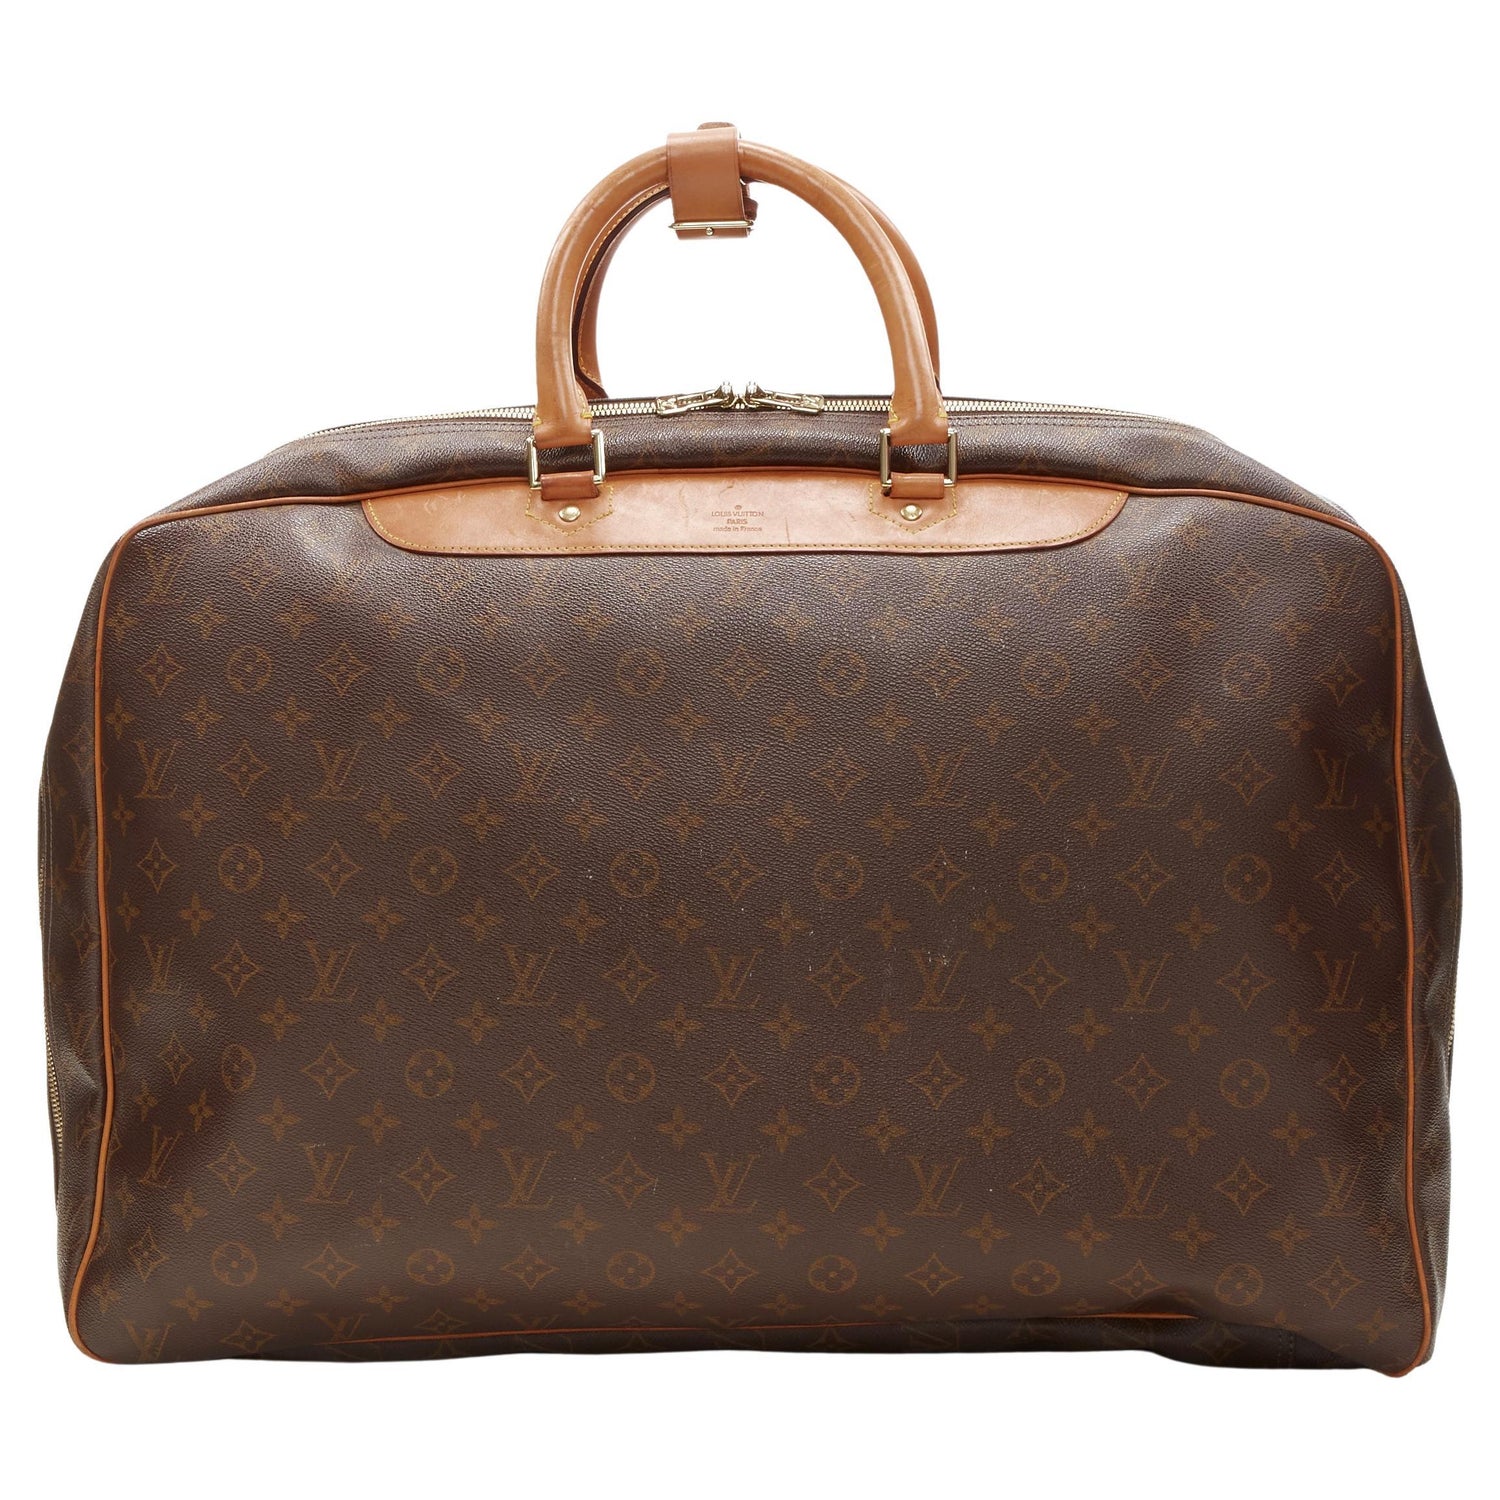 Louis Vuitton Pegase 70 Suitcase Bag Classic Luggage w/ Garment Bag 💝